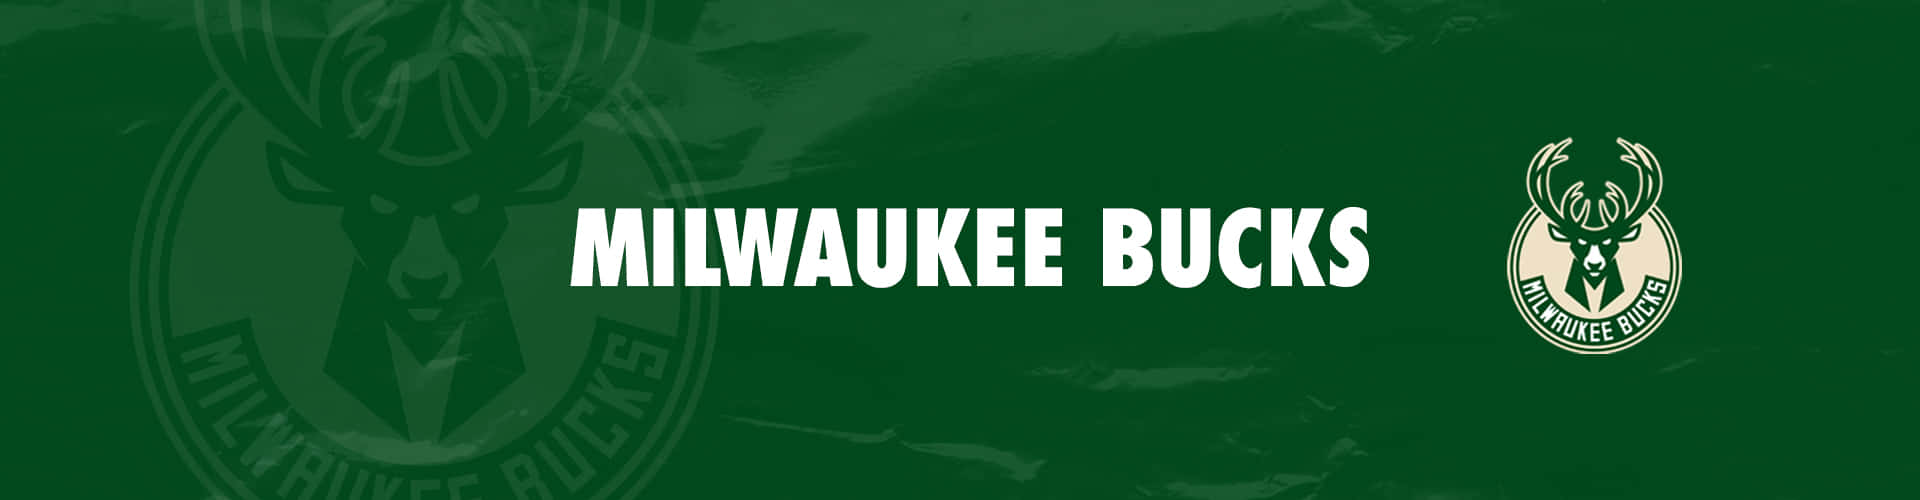 Oicônico Logo Da Equipe De Basquete Milwaukee Bucks. Papel de Parede